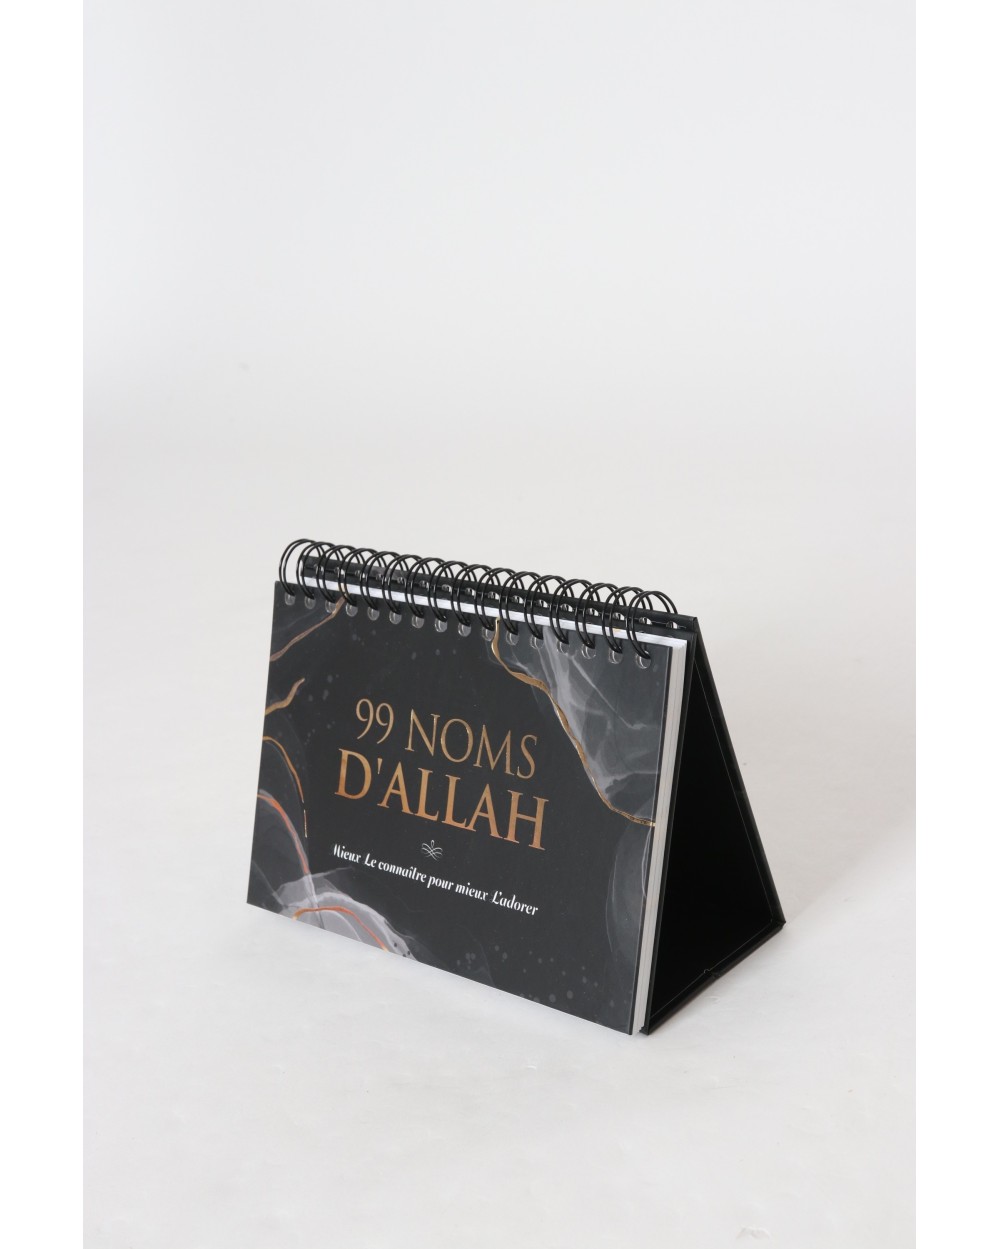 99 noms d'Allah - Calendrier chevalet - Editions al-hadith